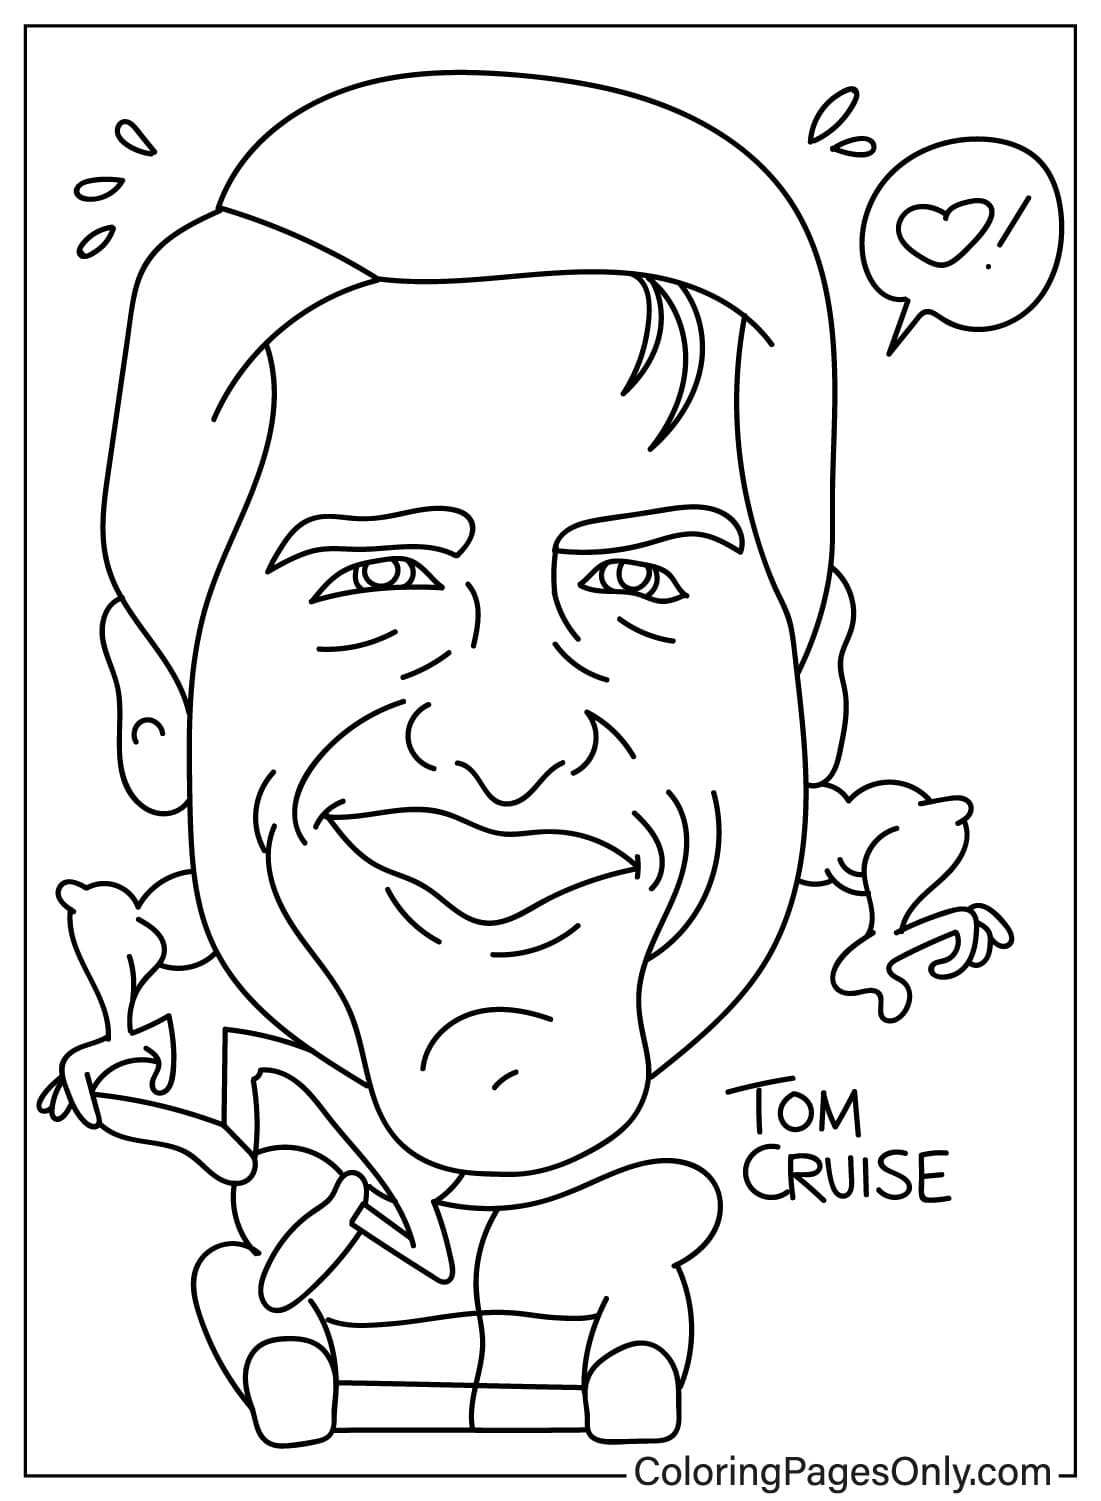 Coloriage Tom Cruise de Tom Cruise